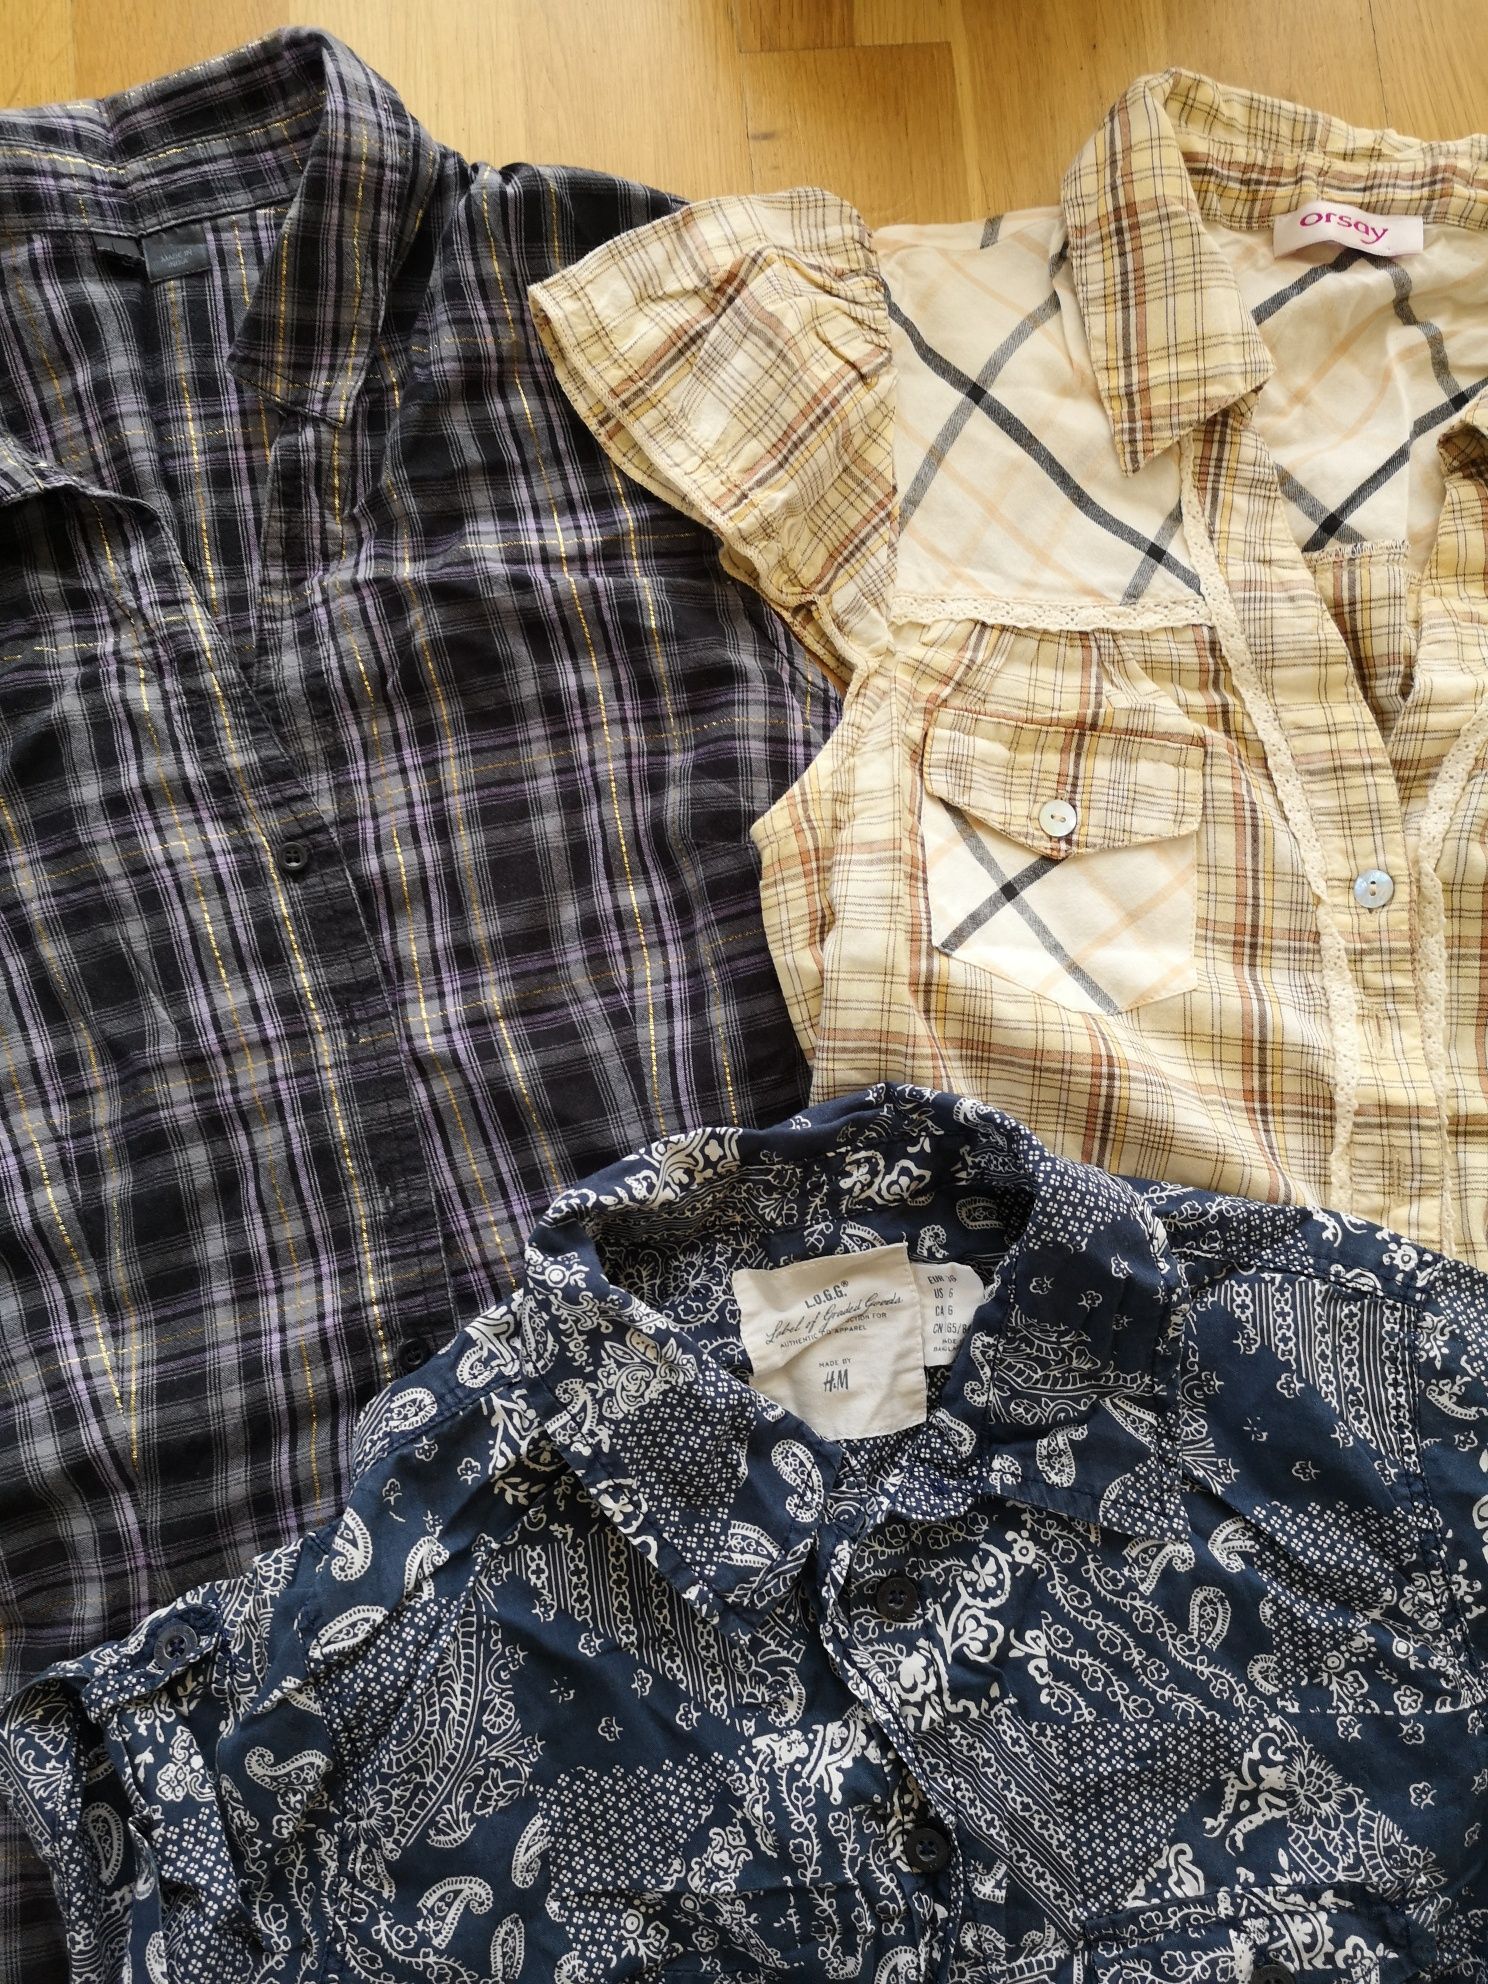 Koszulki /koszule bluzka damska krótki rękaw /H&M, Orsay /S